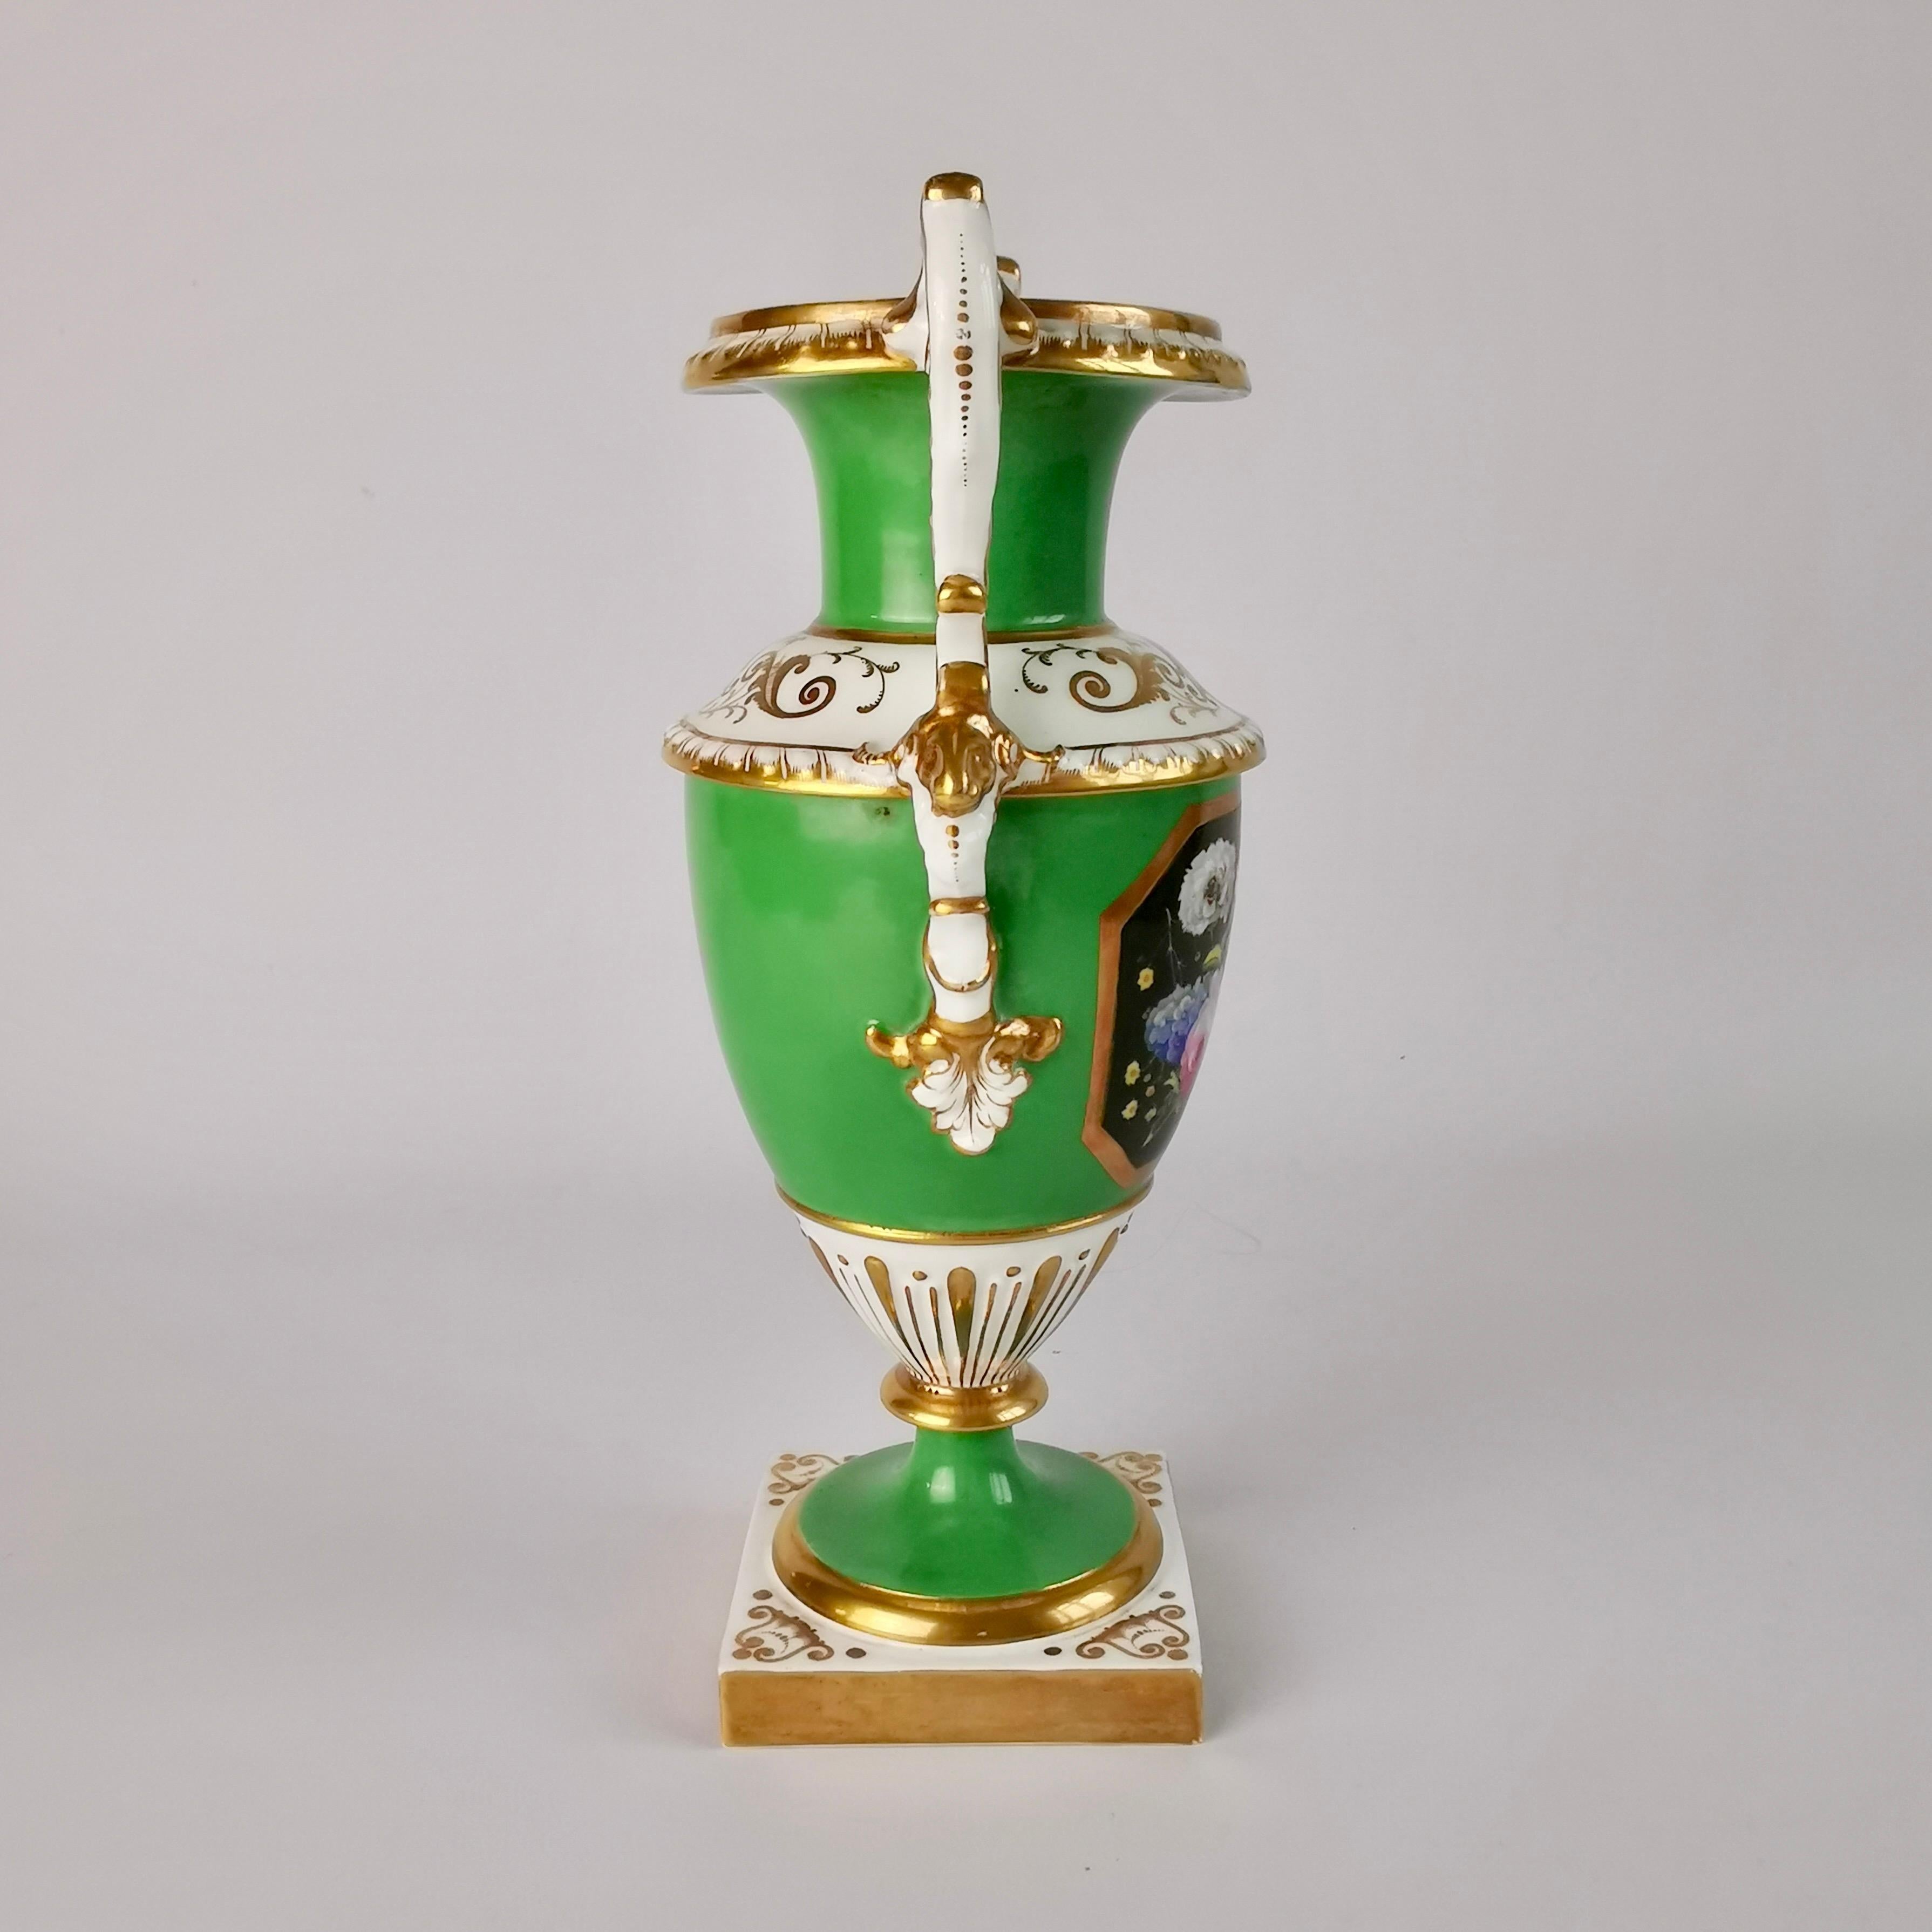 Hand-Painted Minton Porcelain Vase, Elgin Shape, Green with Floral Reserve, 1830-1835